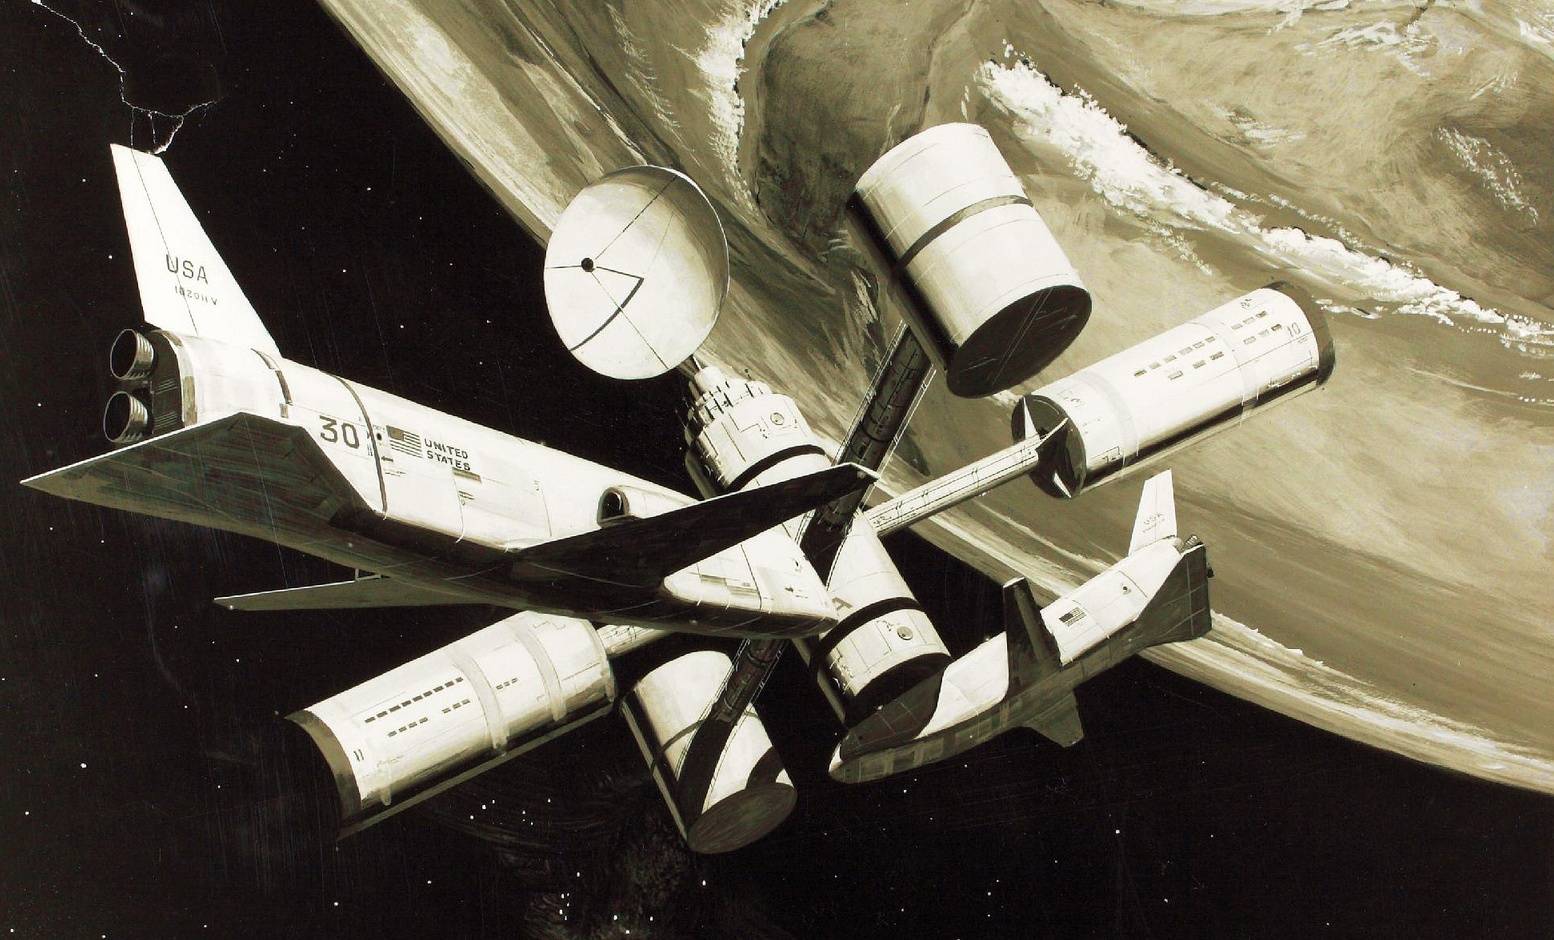 space shuttle concepts